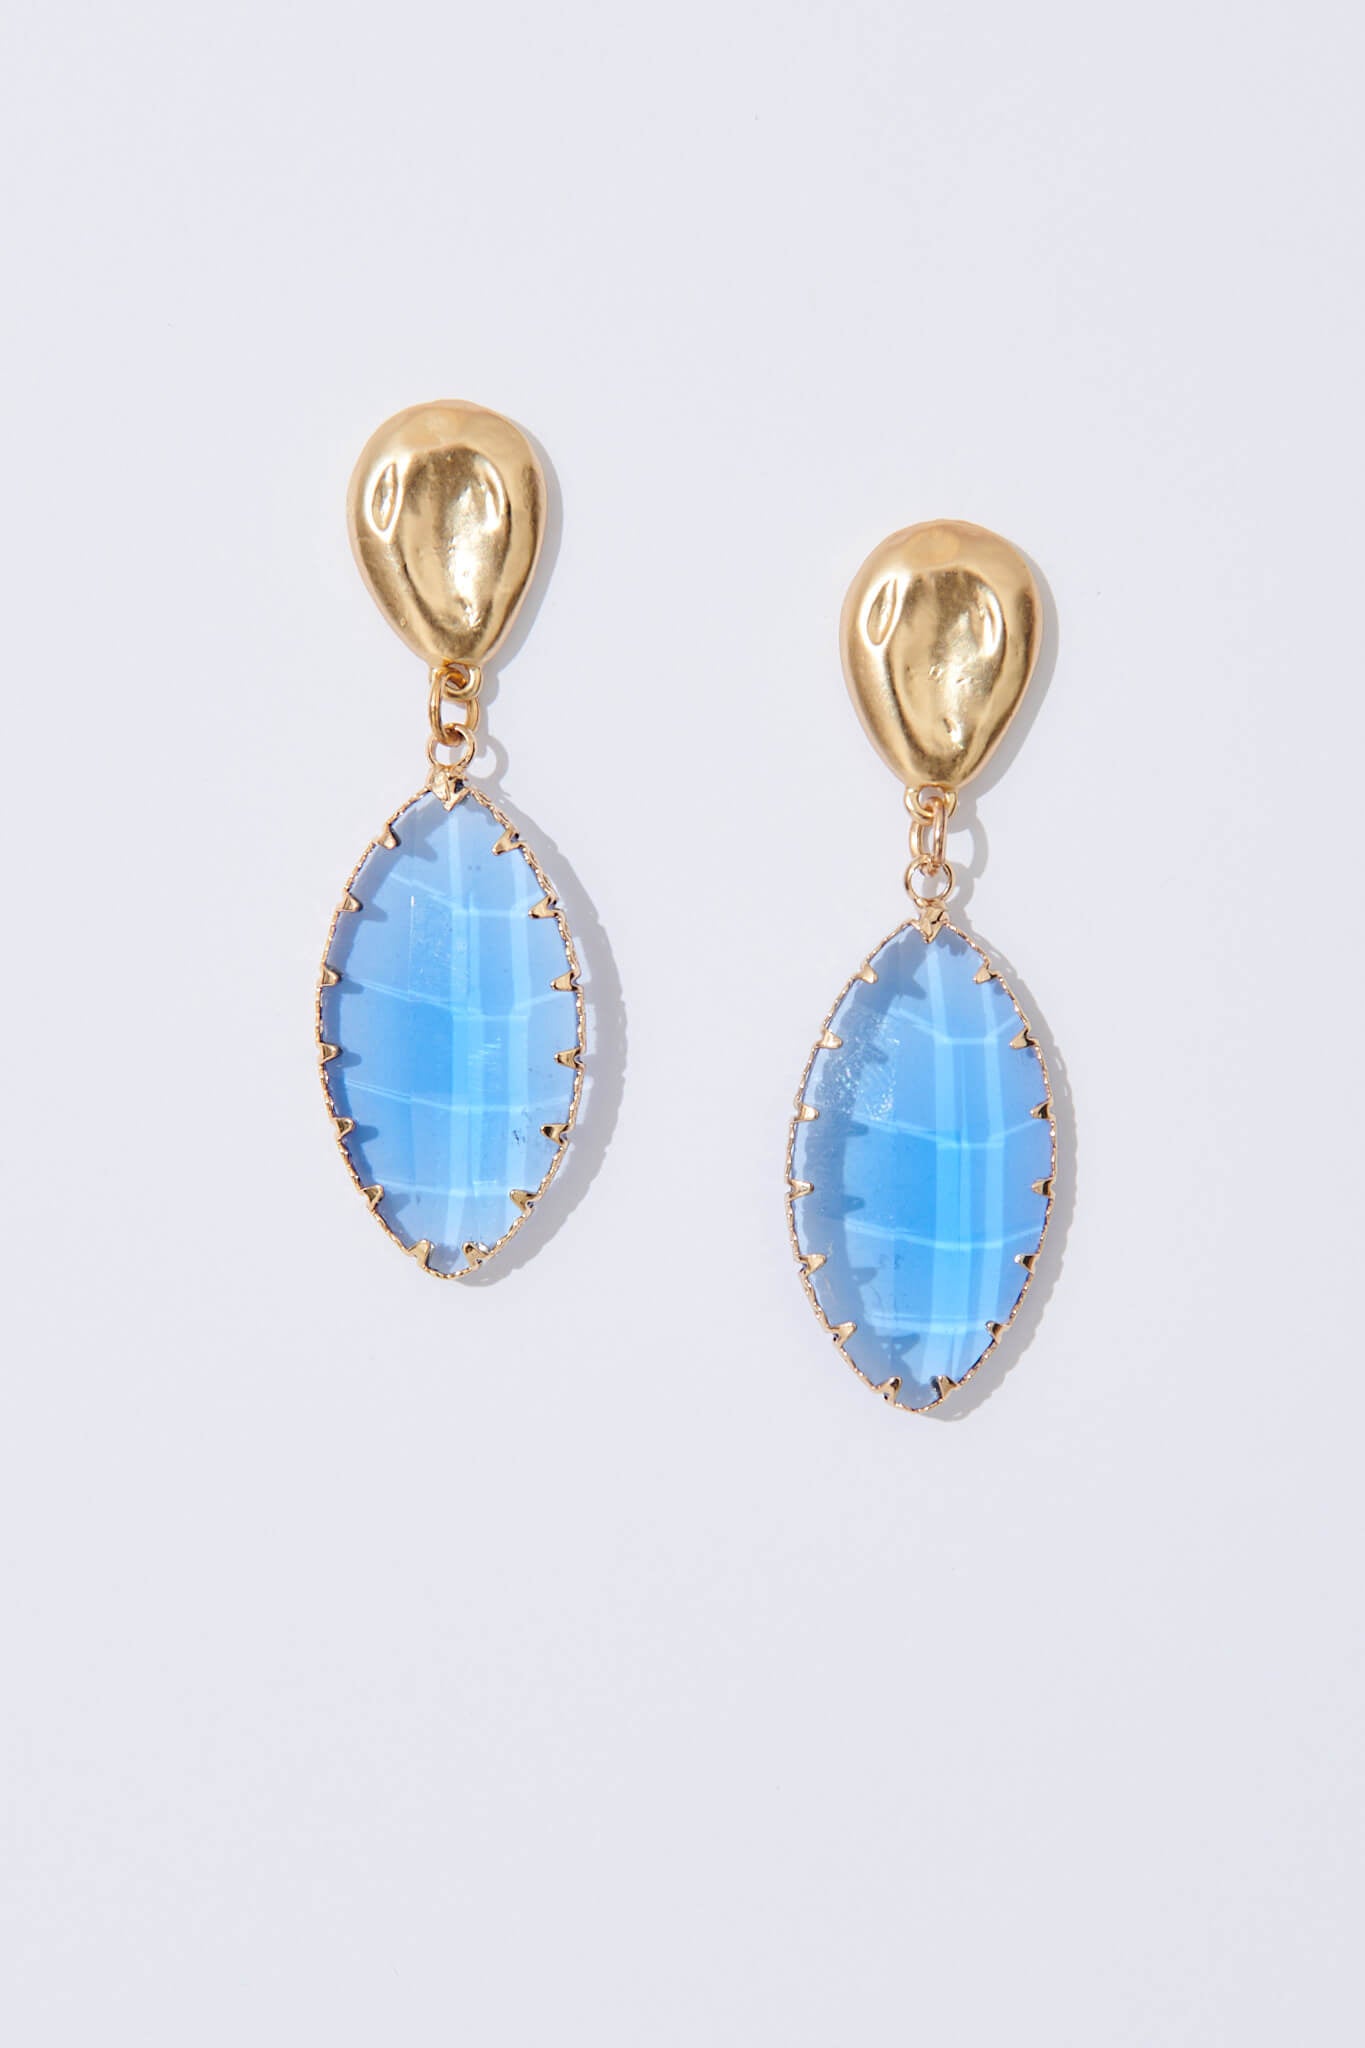 August + Delilah Harrieta Drop Earrings In Gold With Blue Stone - flatlay